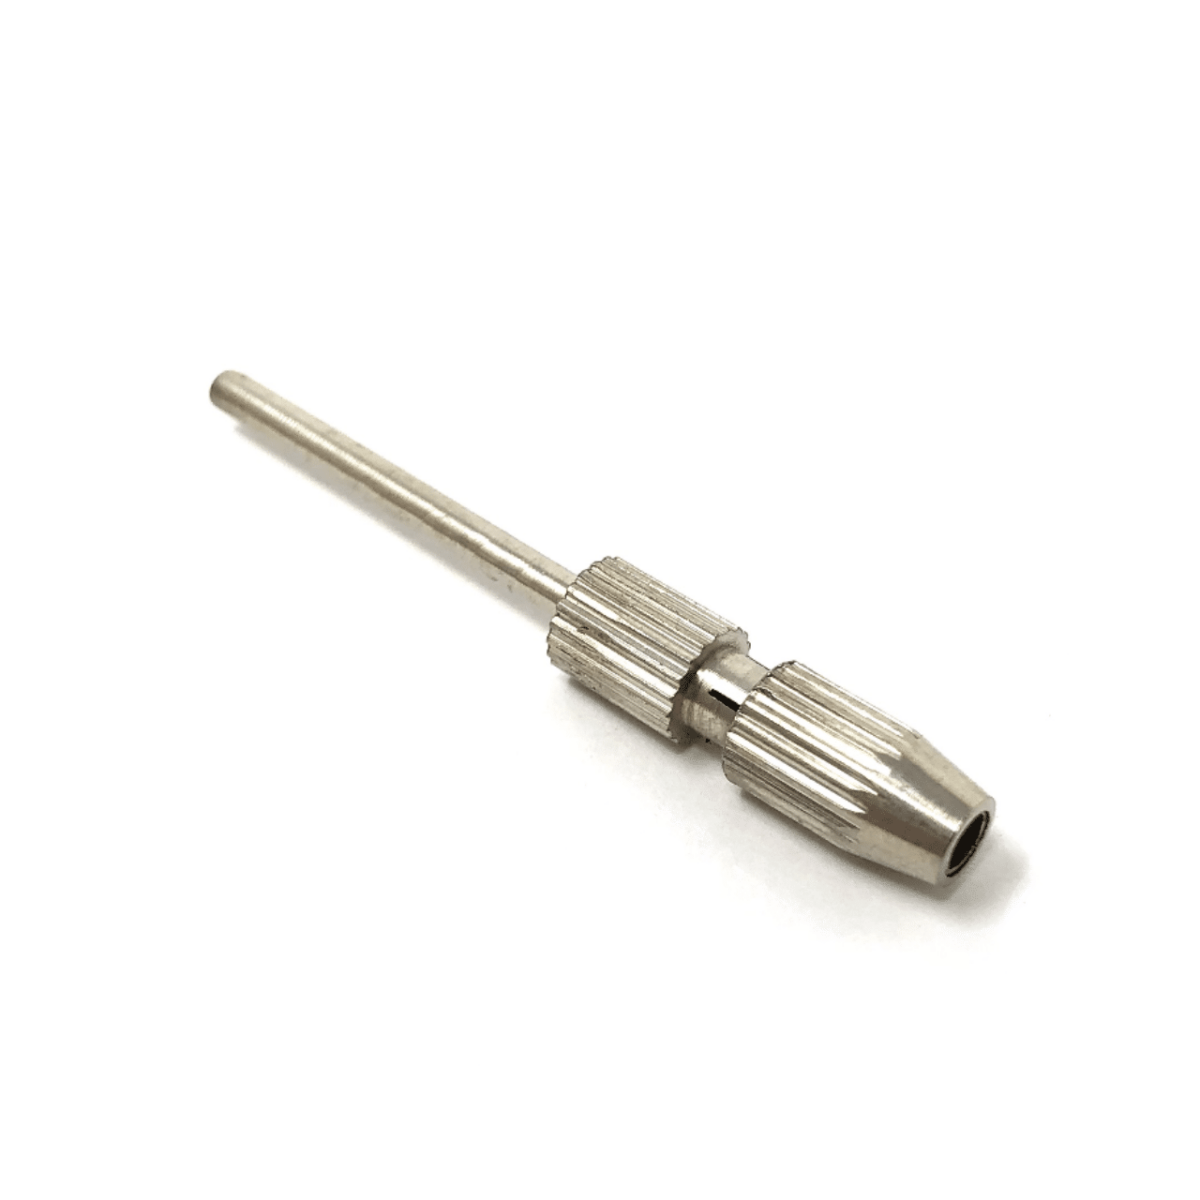 Pin Polisher Mandrel Jewellery Polishing Tool 3mm Pins Use With Rotary Tools 194557162137 - Maddisons UK